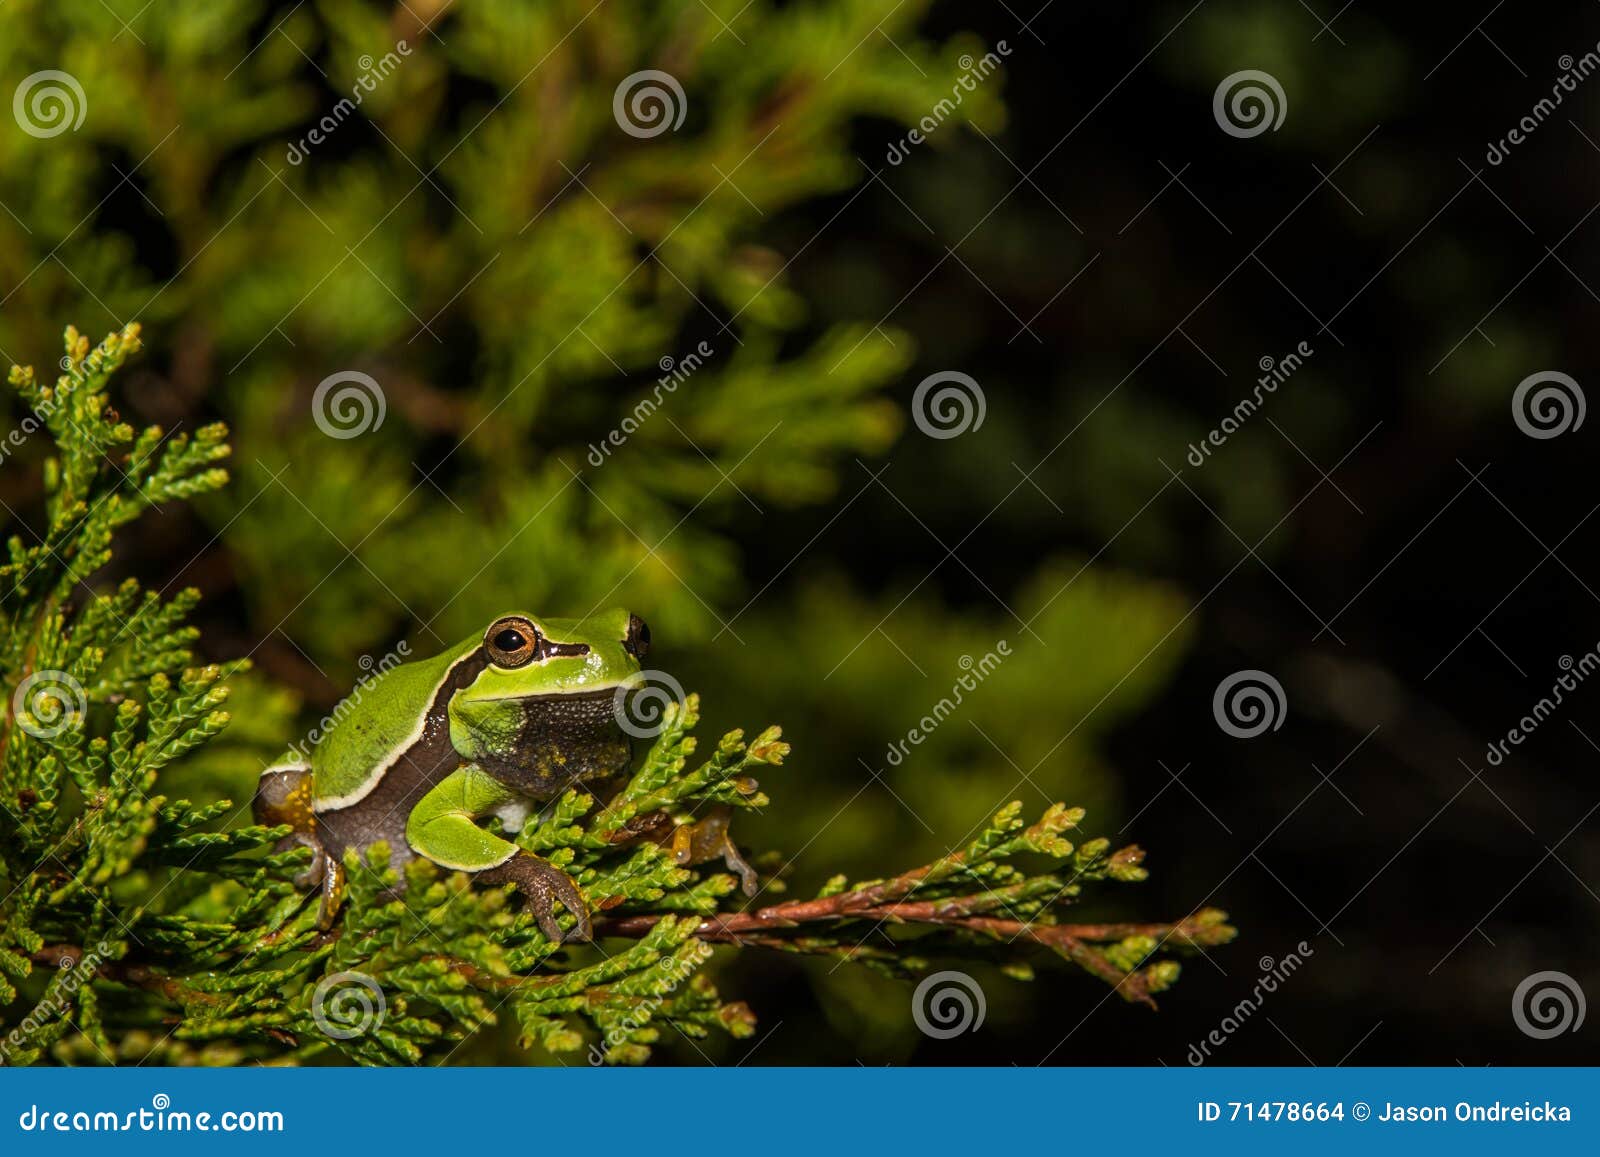 pine barrens treefrog